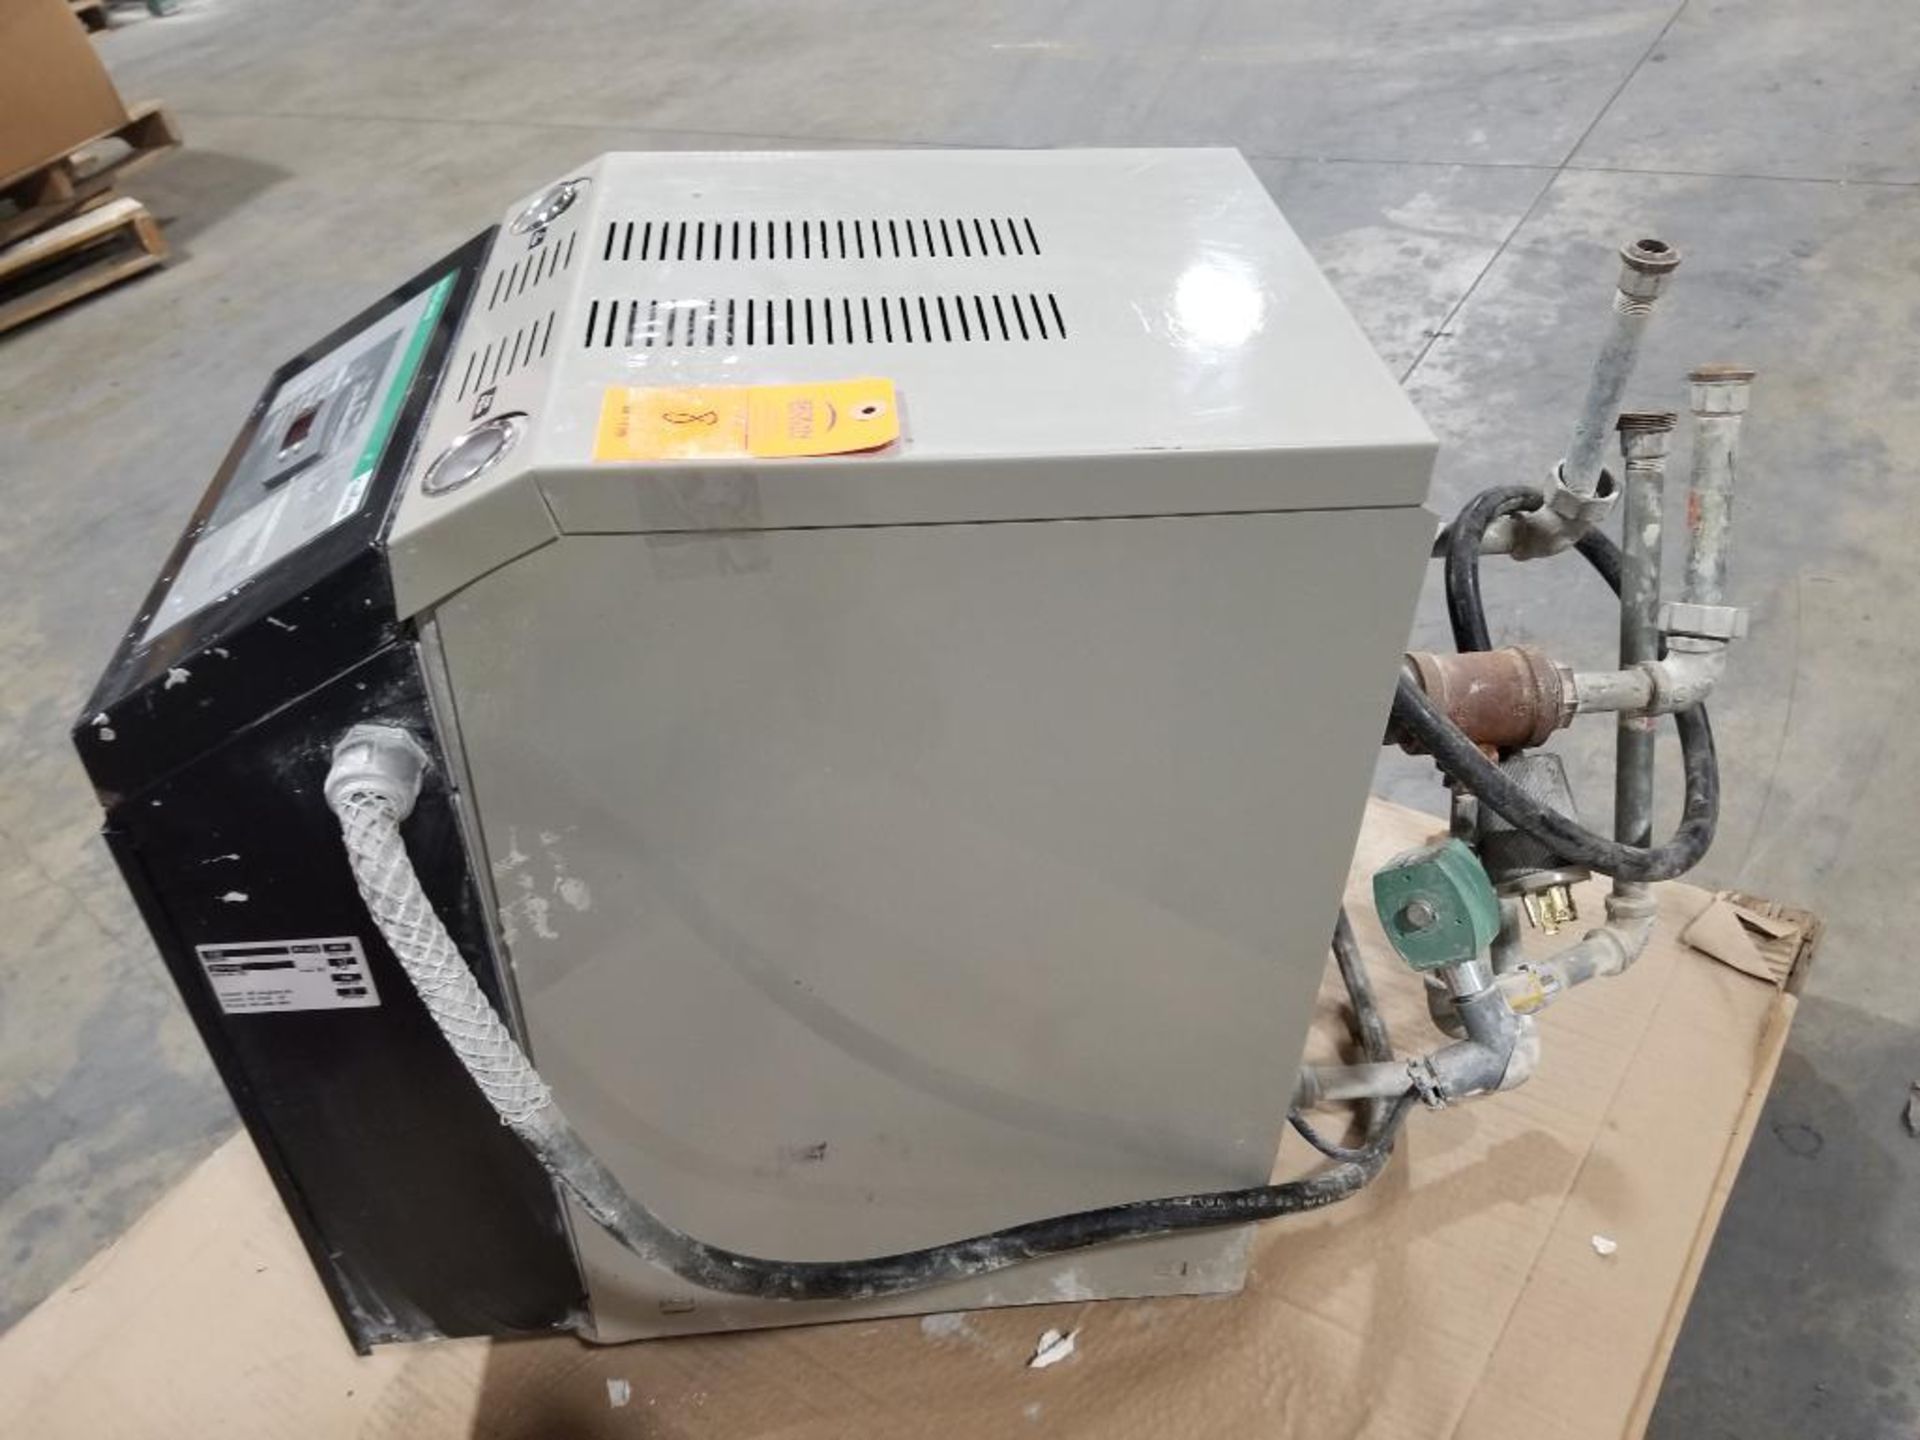 Conair Thermolator TW-PLUS. 3PH 460V. - Image 4 of 8